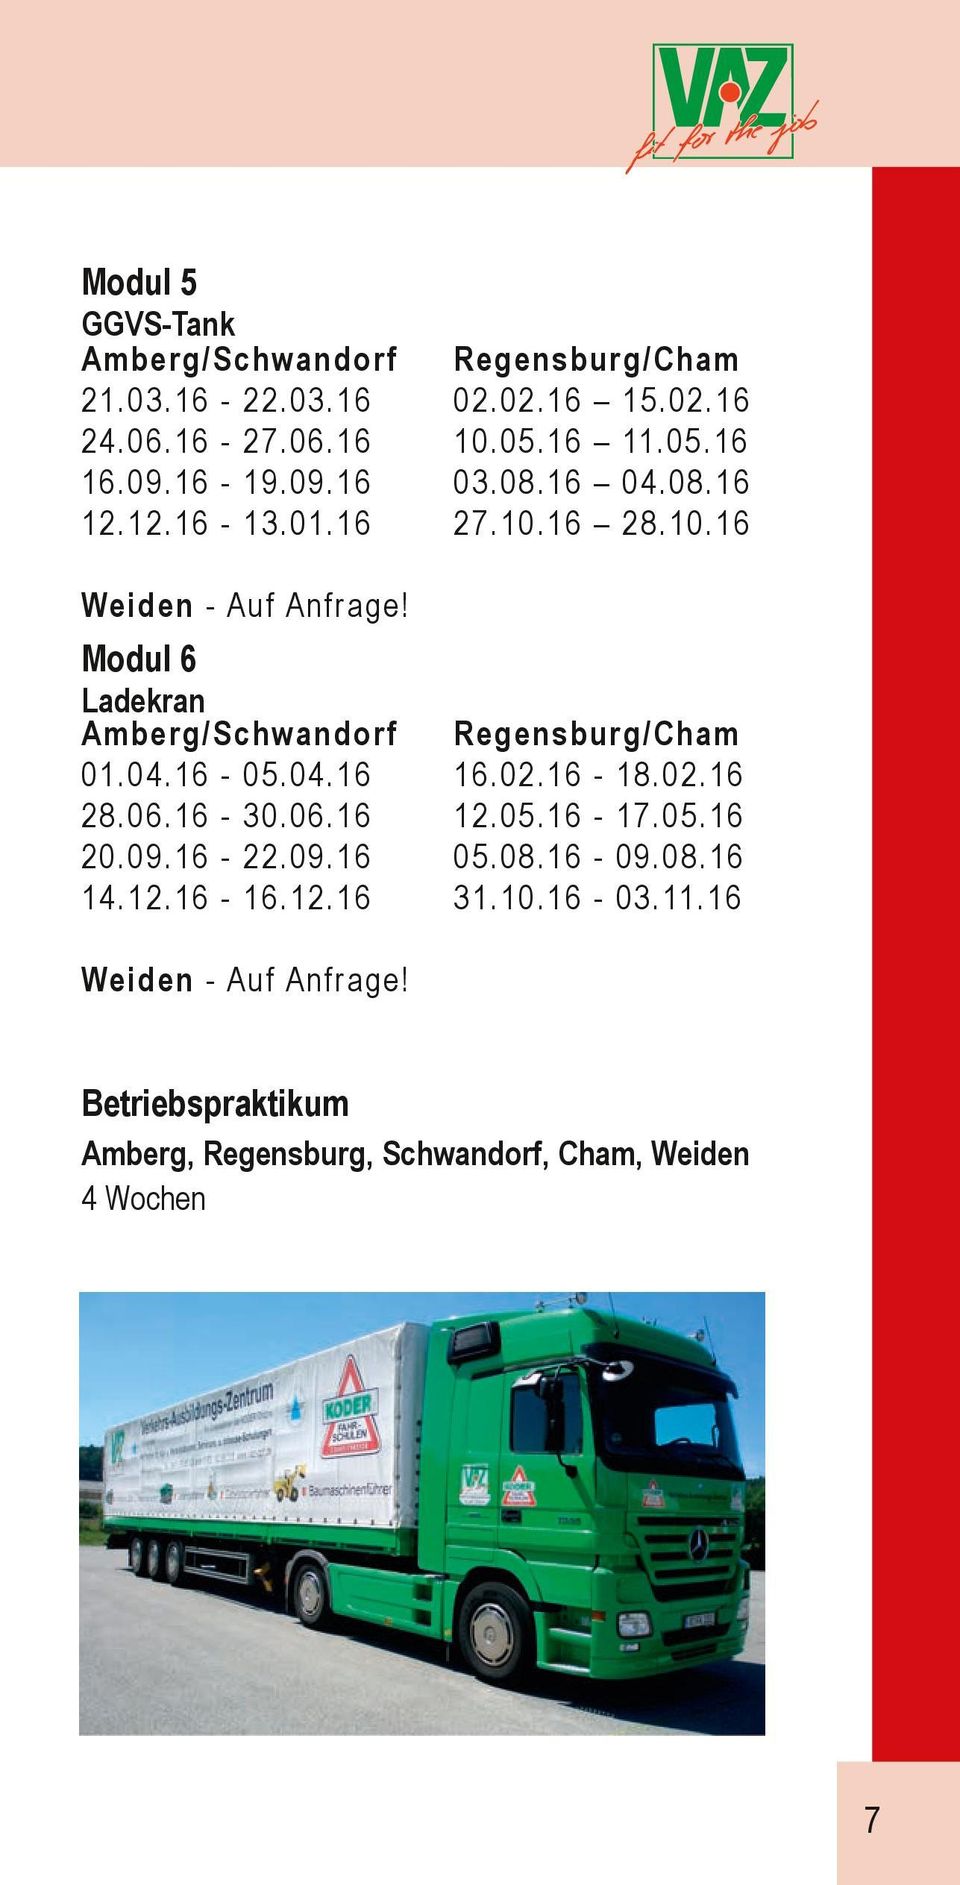 Modul 6 Ladekran Amberg/Schwandorf 01.04.16-05.04.16 28.06.16-30.06.16 20.09.16-22.09.16 14.12.16-16.12.16 Regensburg/Cham 16.